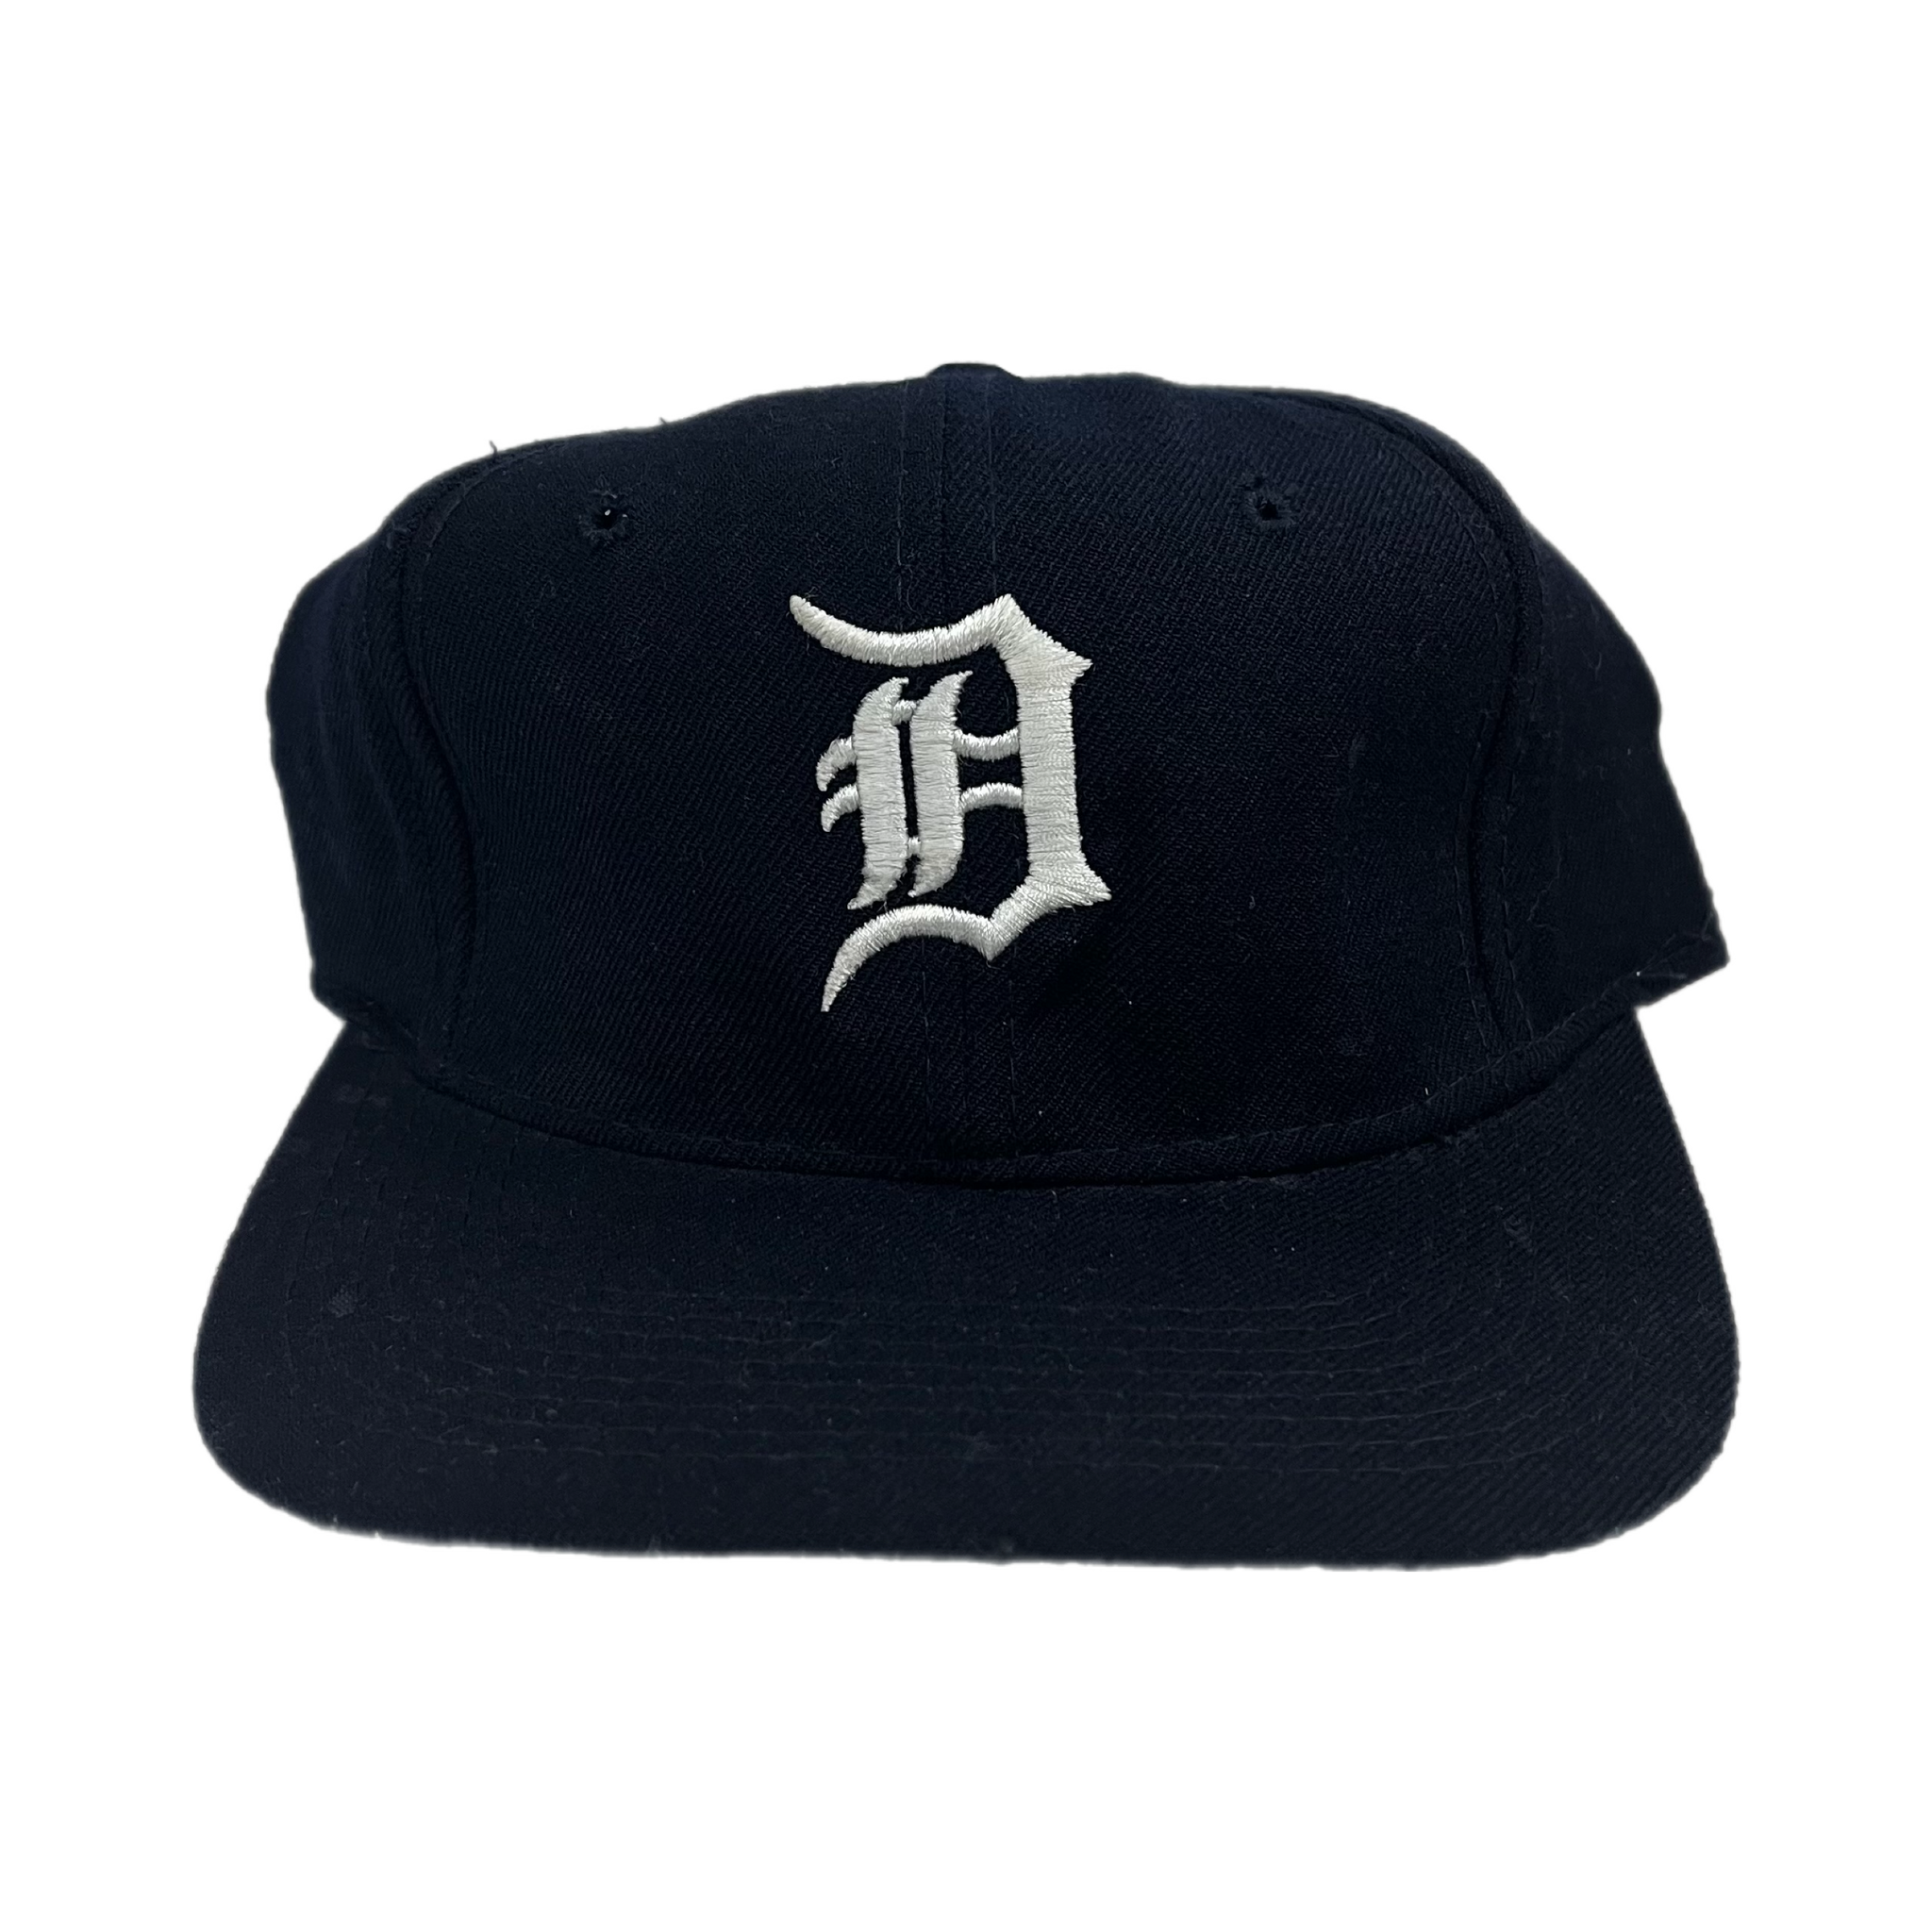 Detroit Tigers Hats - Accessories